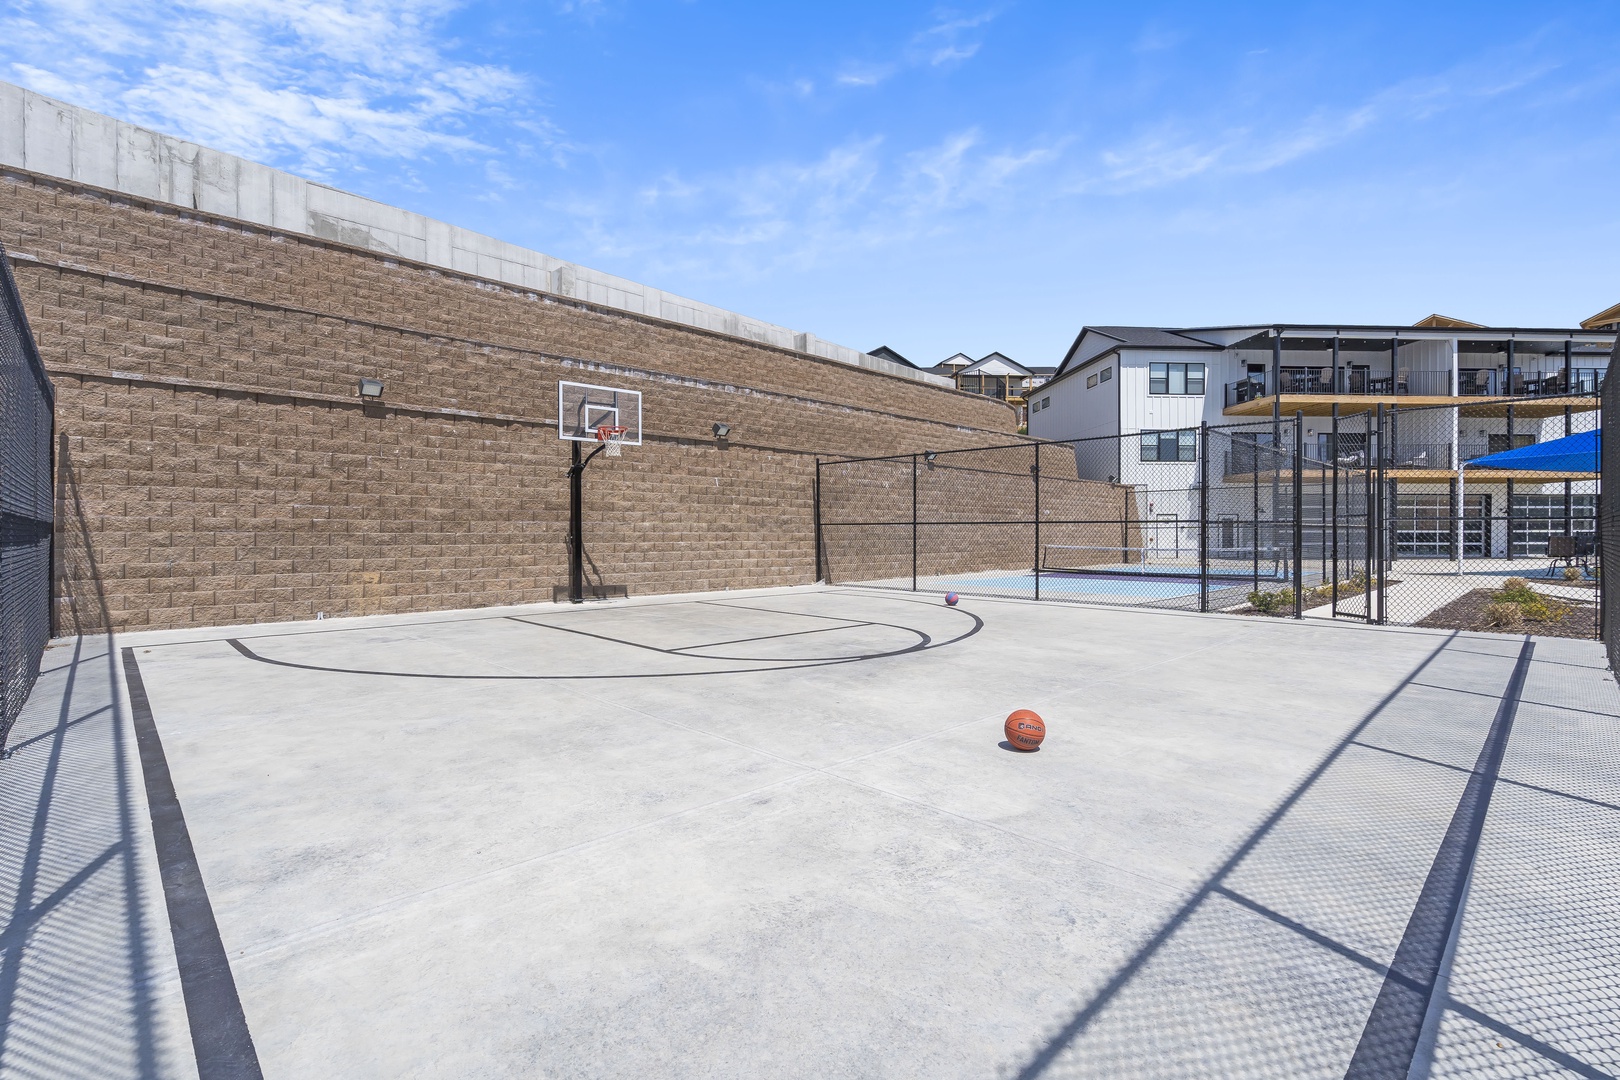 Community basketball court